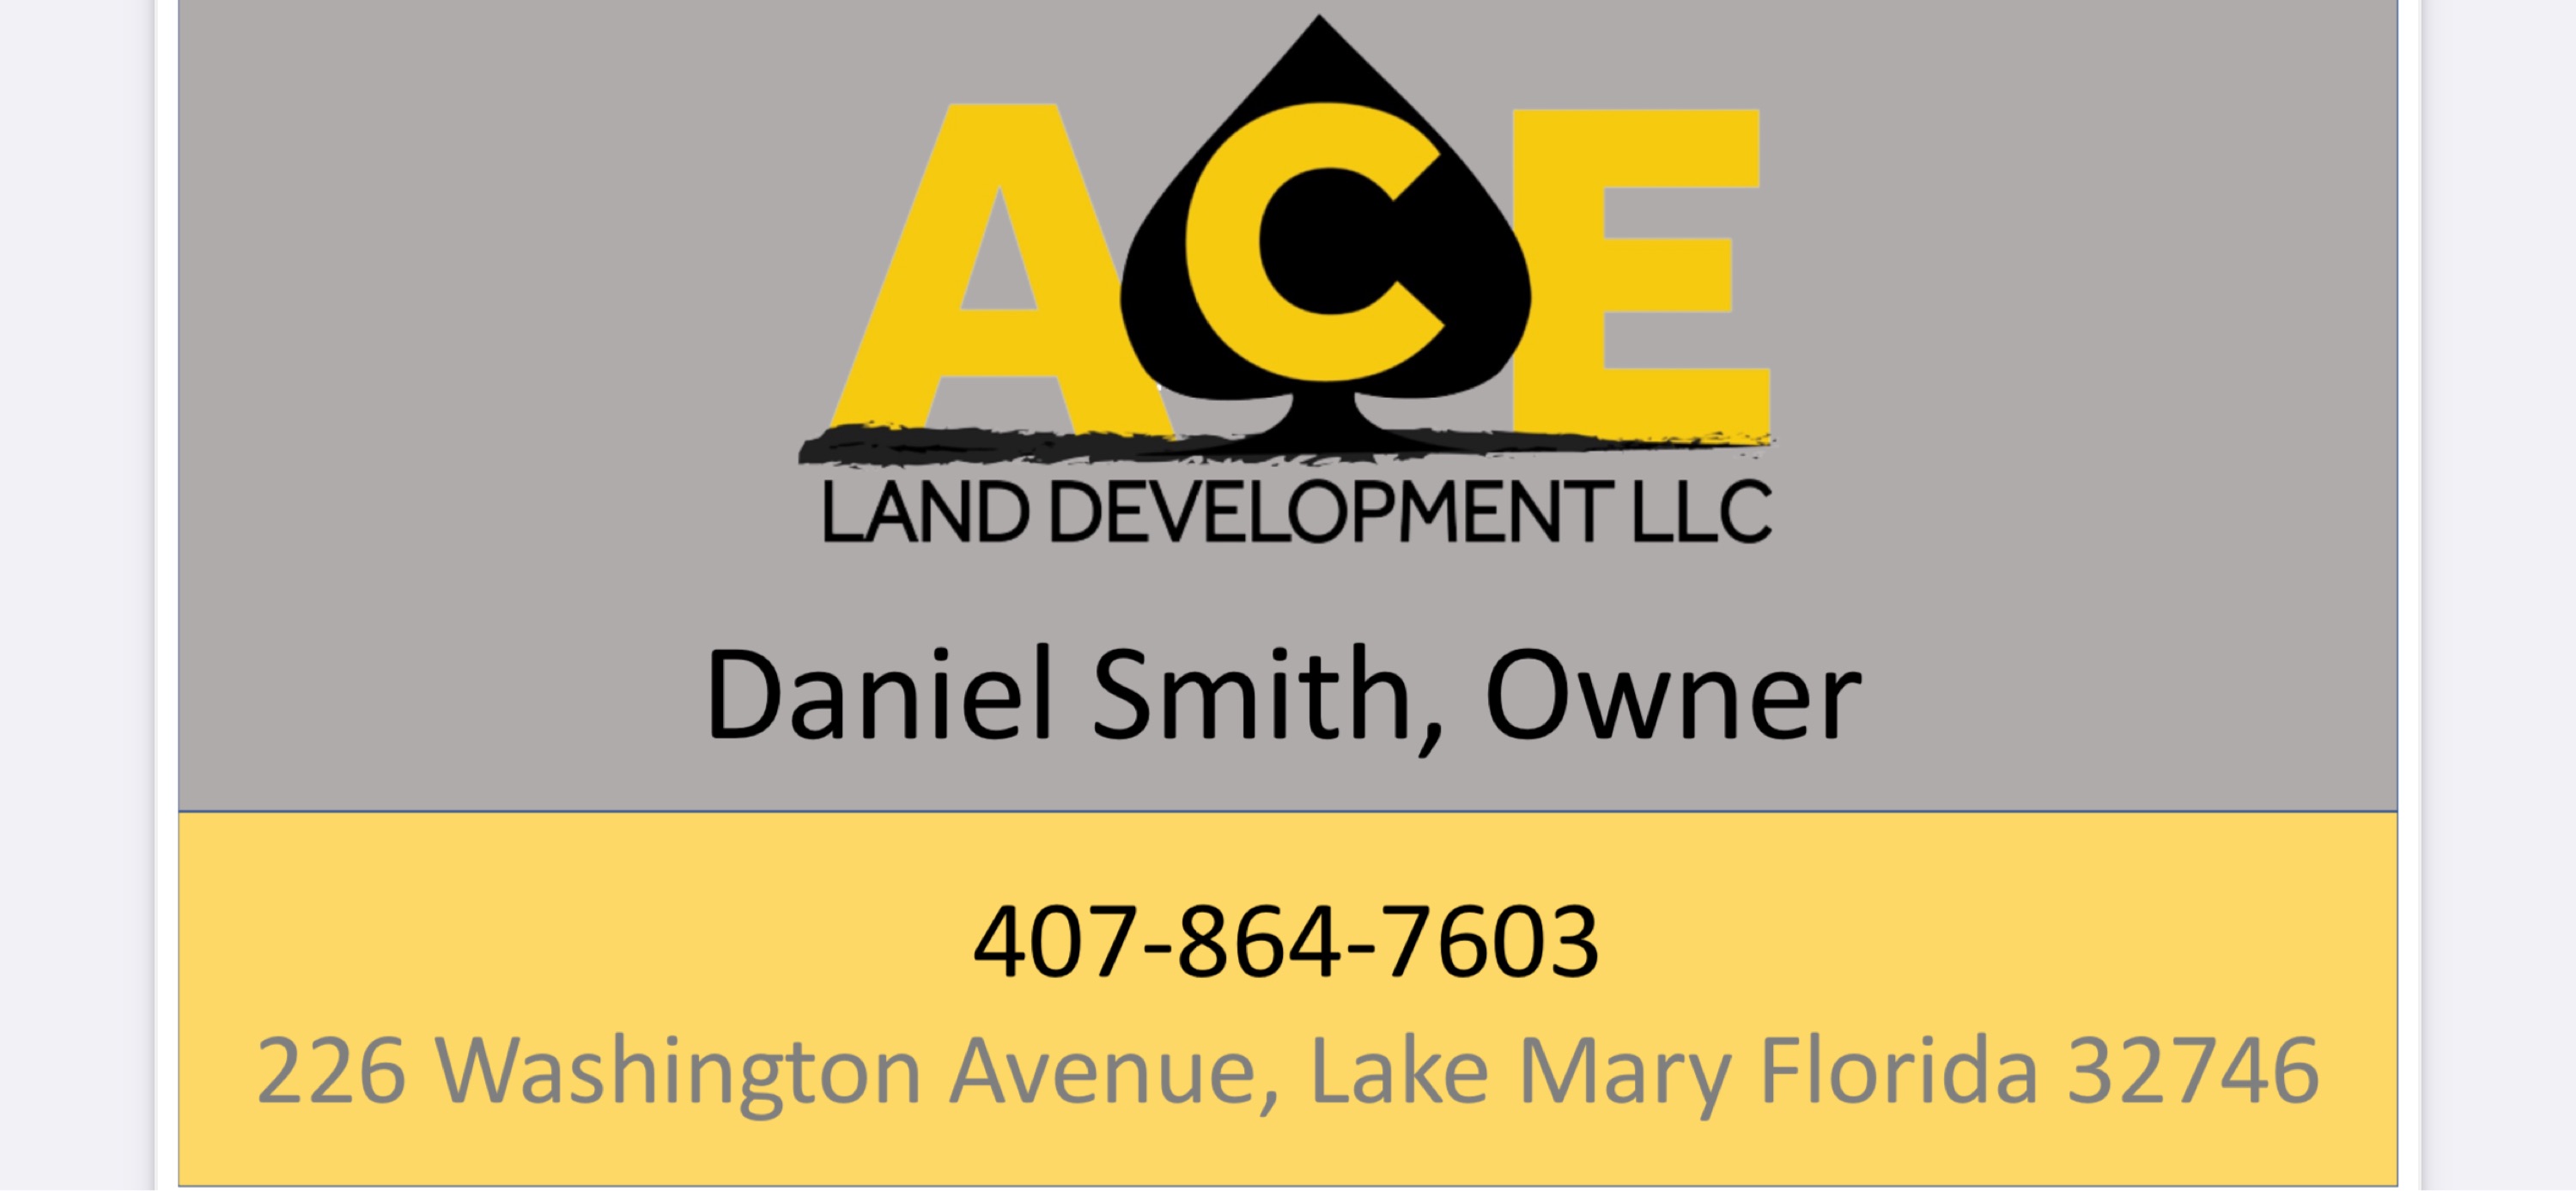 Ace Land Development Logo